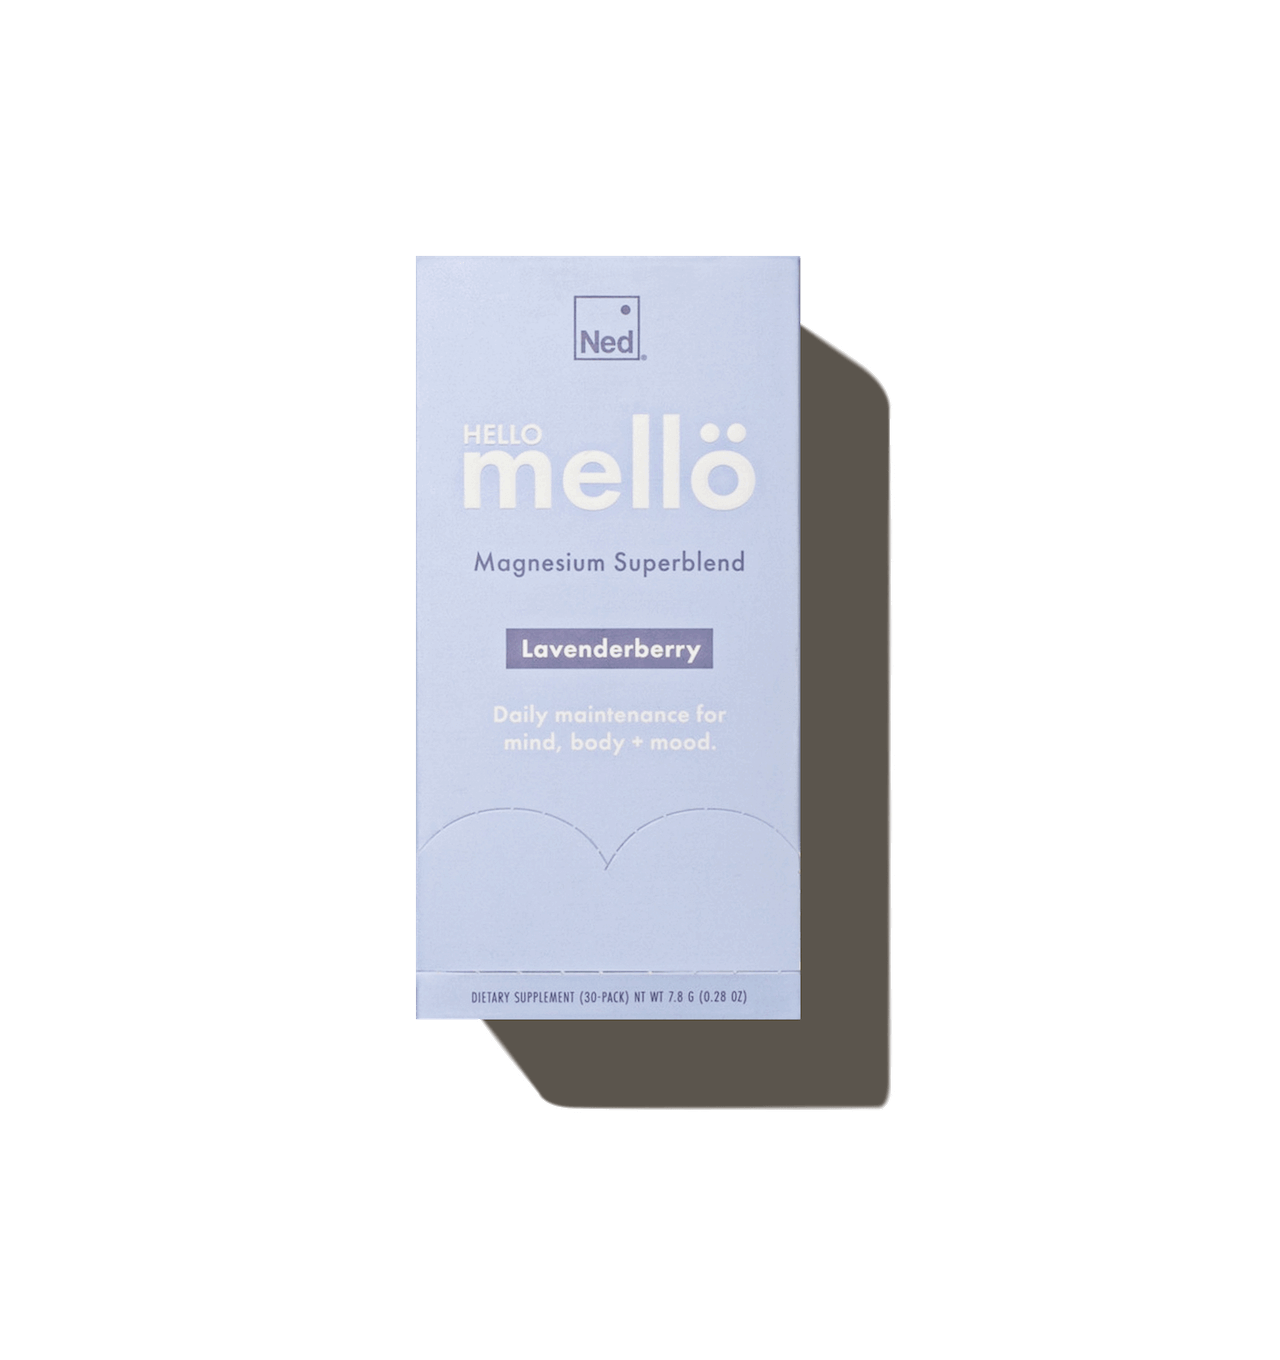 Ned Mello Full Spectrum Magnesium Blend Lavenderberry